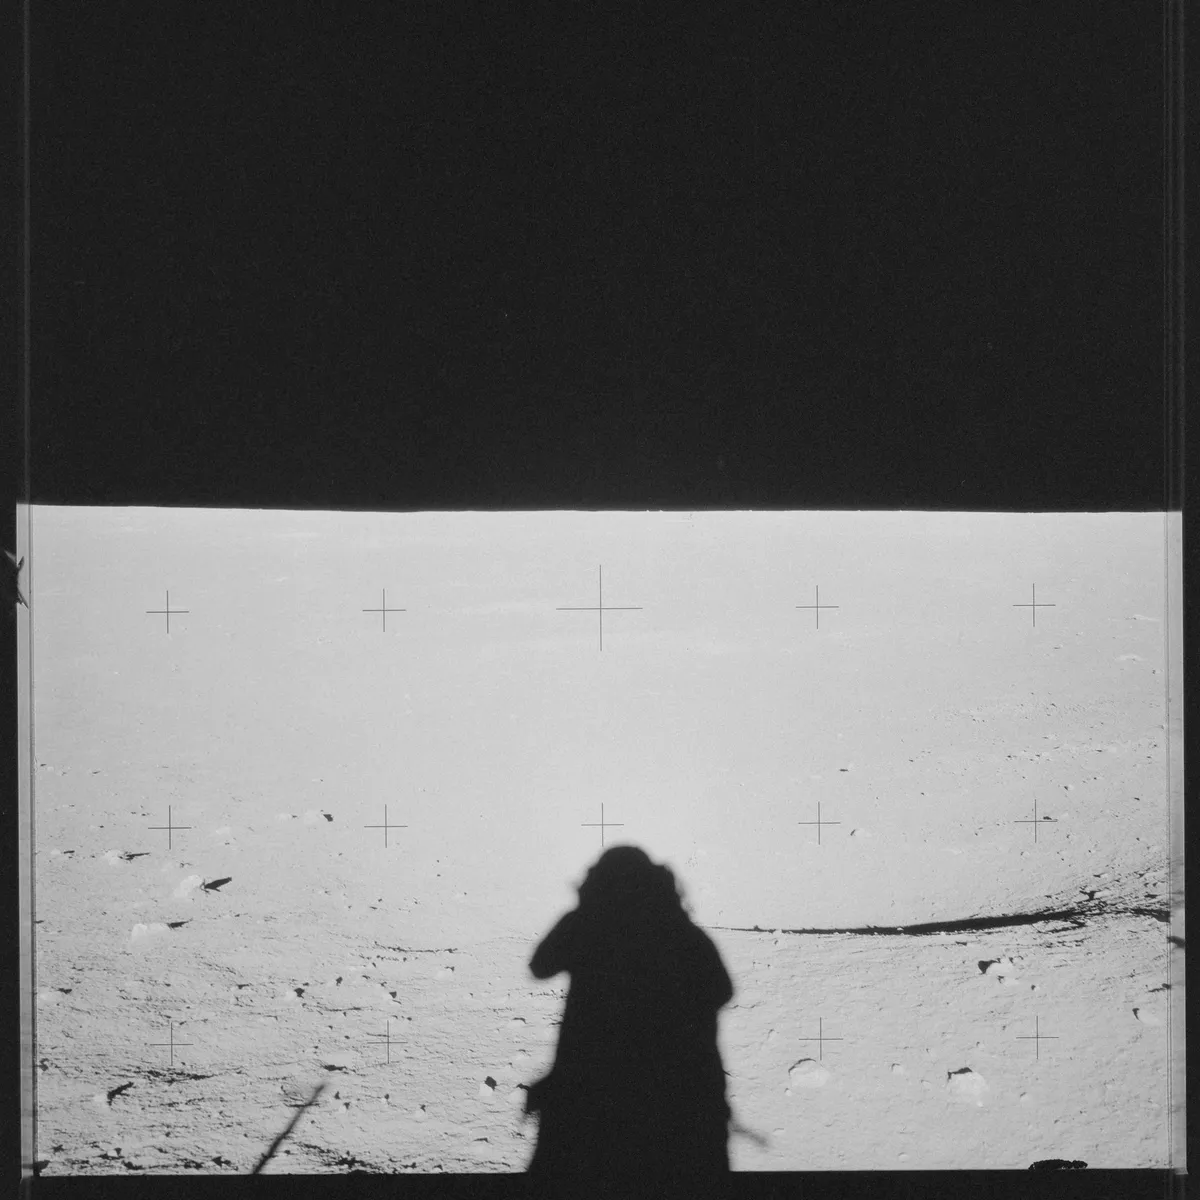 AS12-49-7207 - Apollo 12 Hasselblad image from film magazine 49/Z - EVA-2